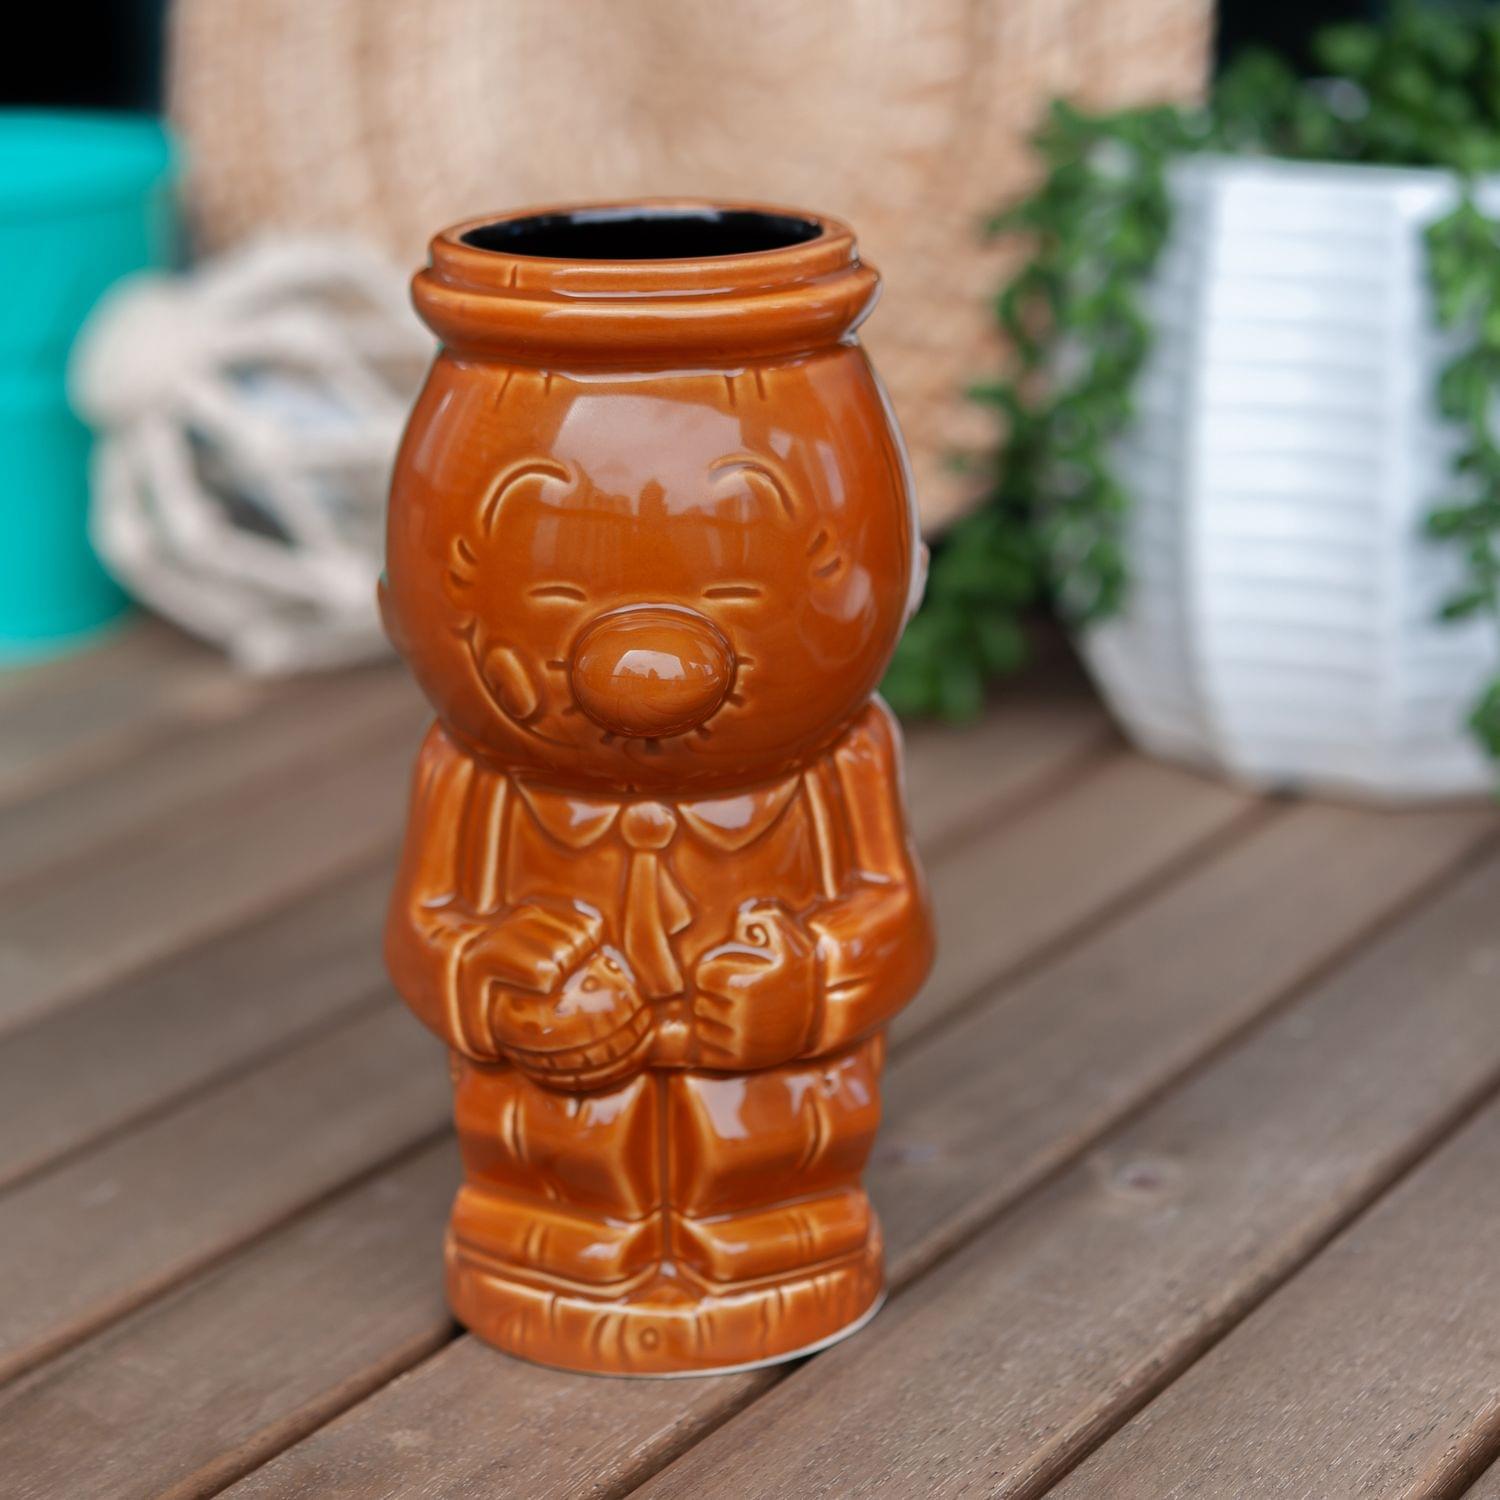 Geeki Tiki Popeye Ceramic Mug | Wimpy | 18 ounces